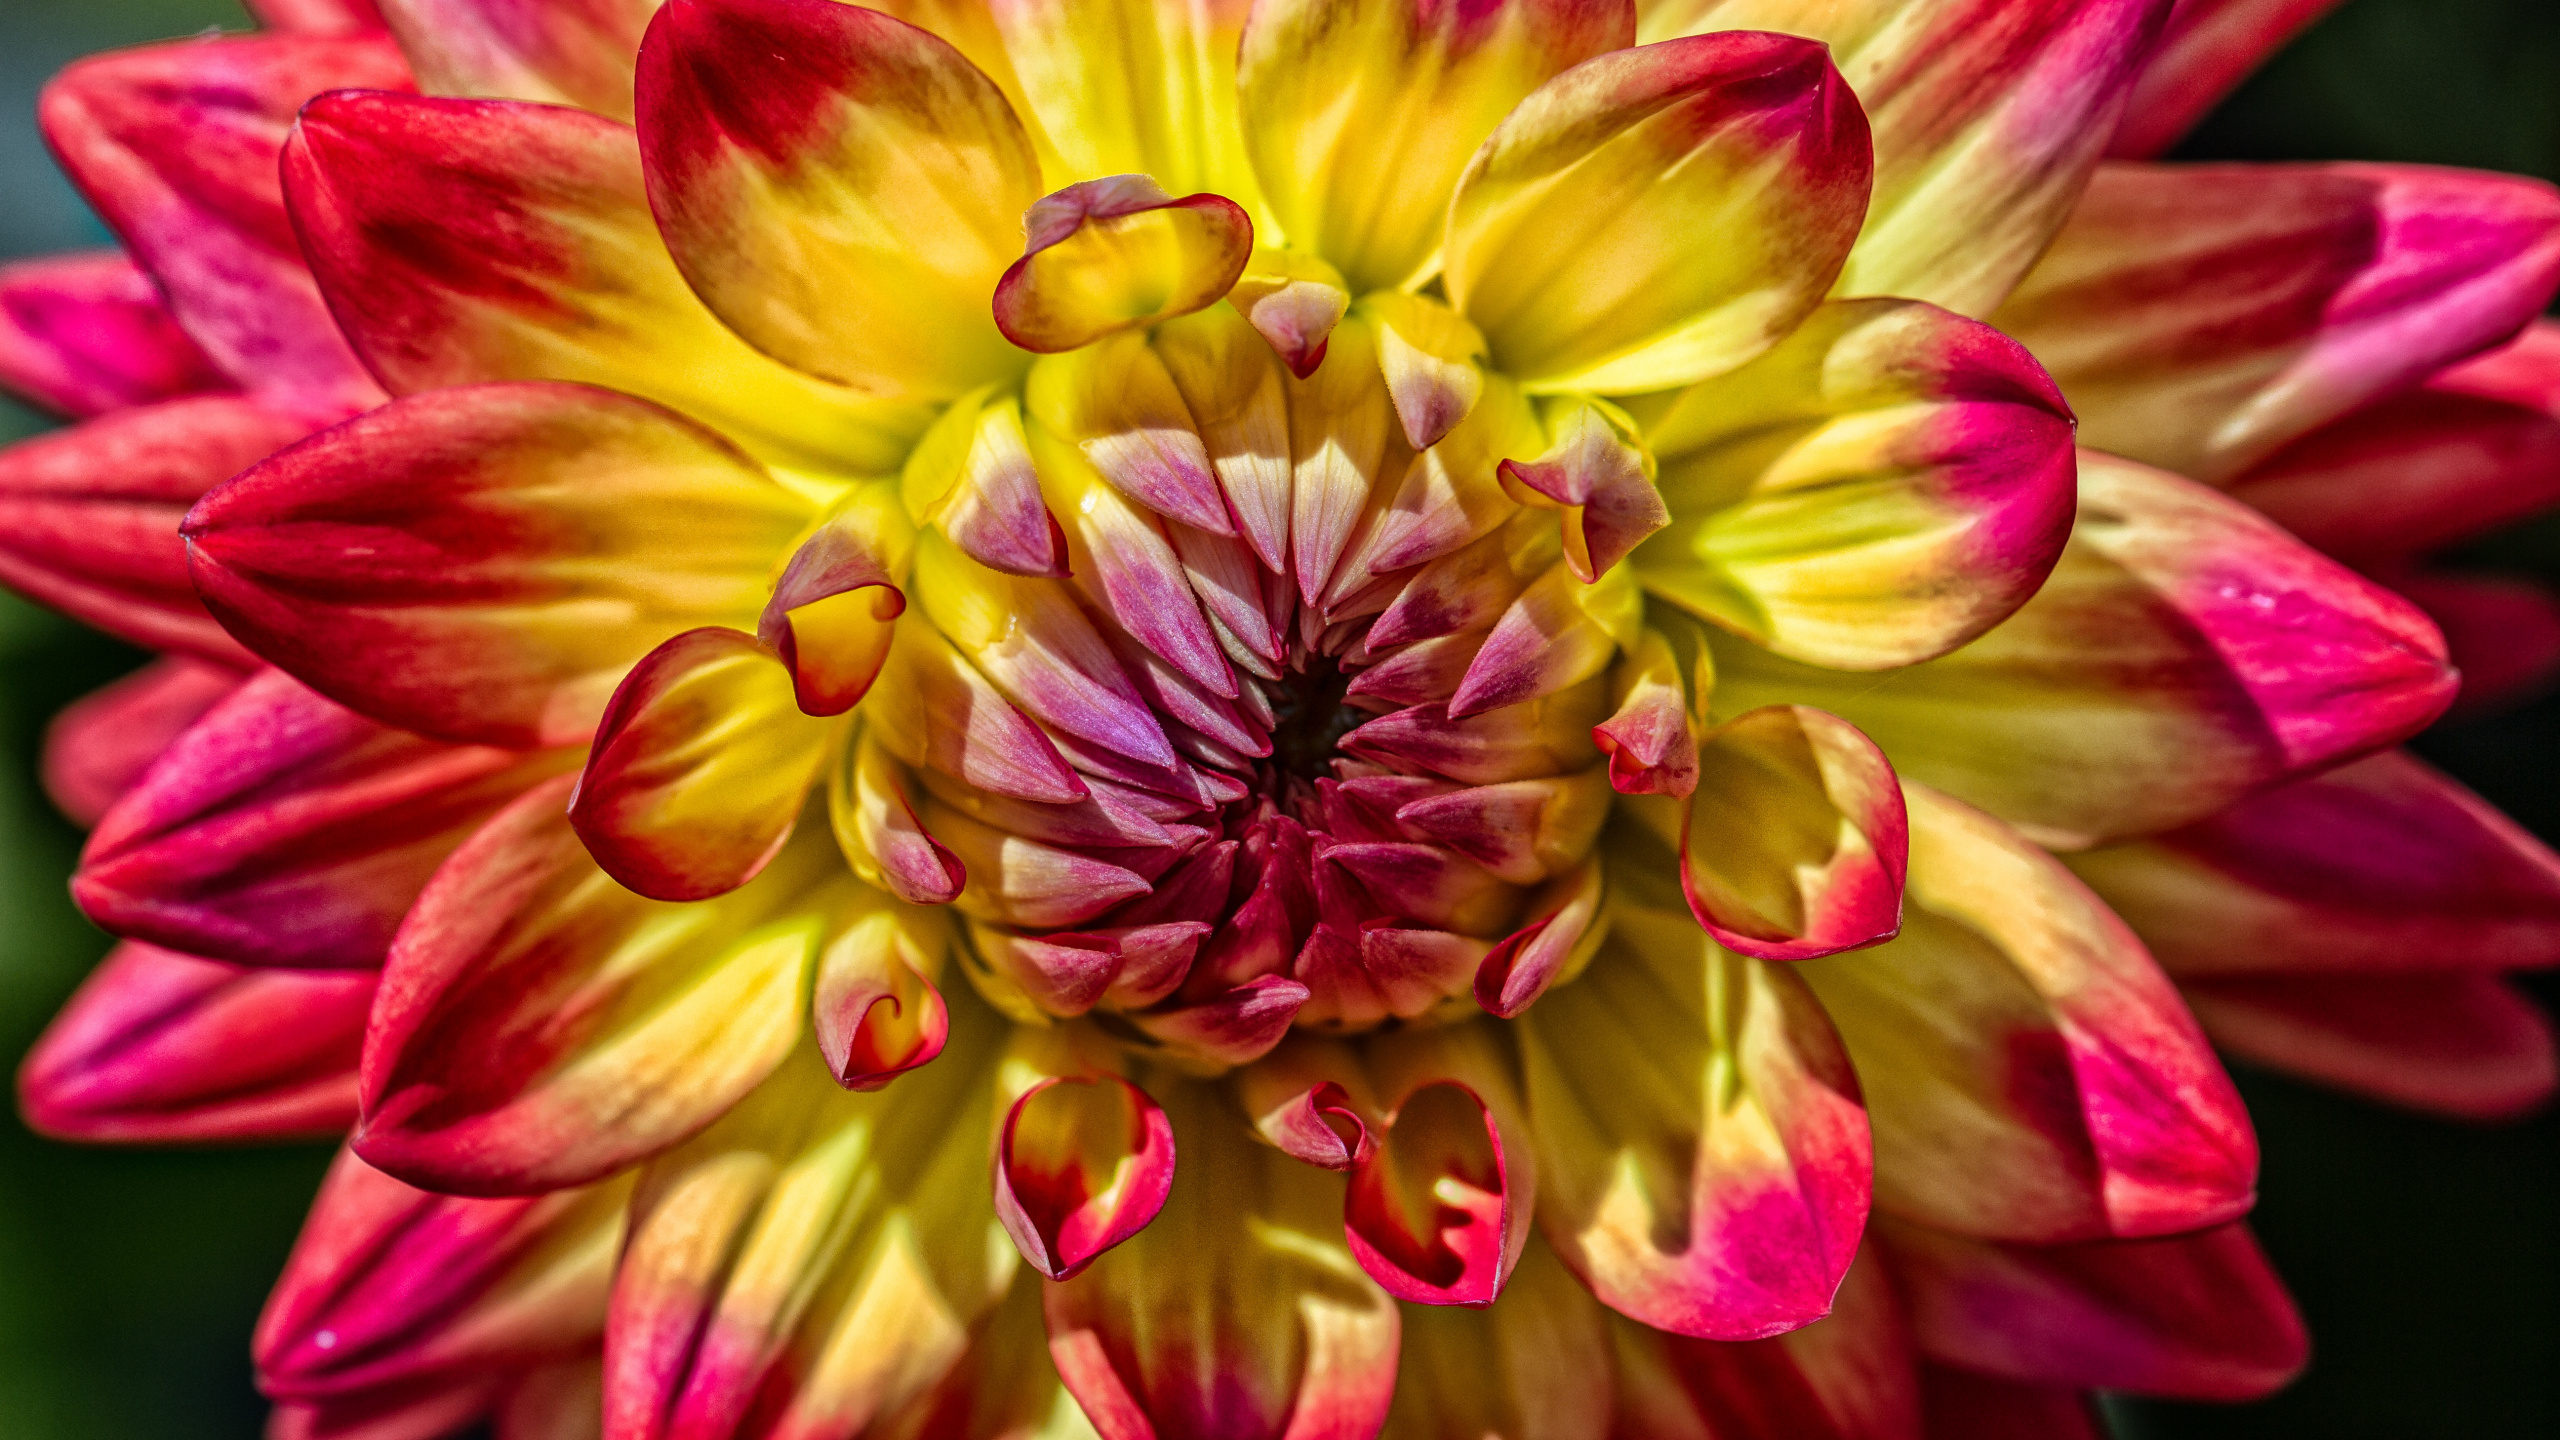 Fleur Rose et Jaune en Macrophotographie. Wallpaper in 2560x1440 Resolution